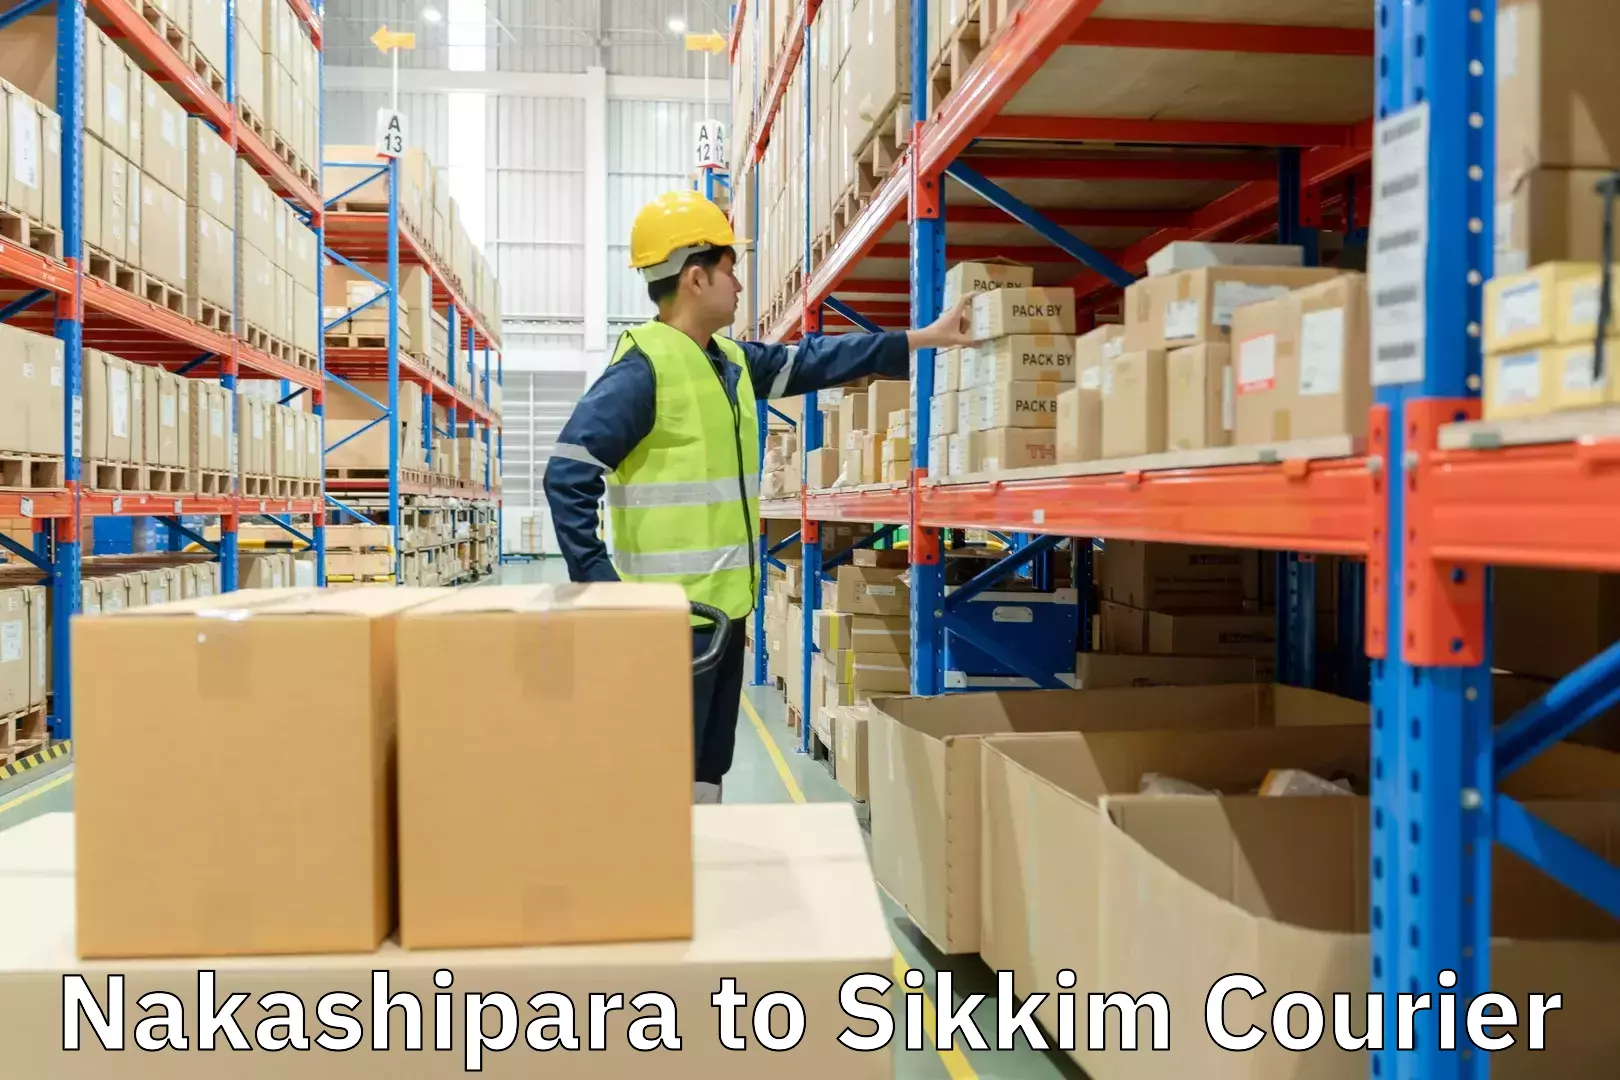 Doorstep delivery service Nakashipara to Sikkim